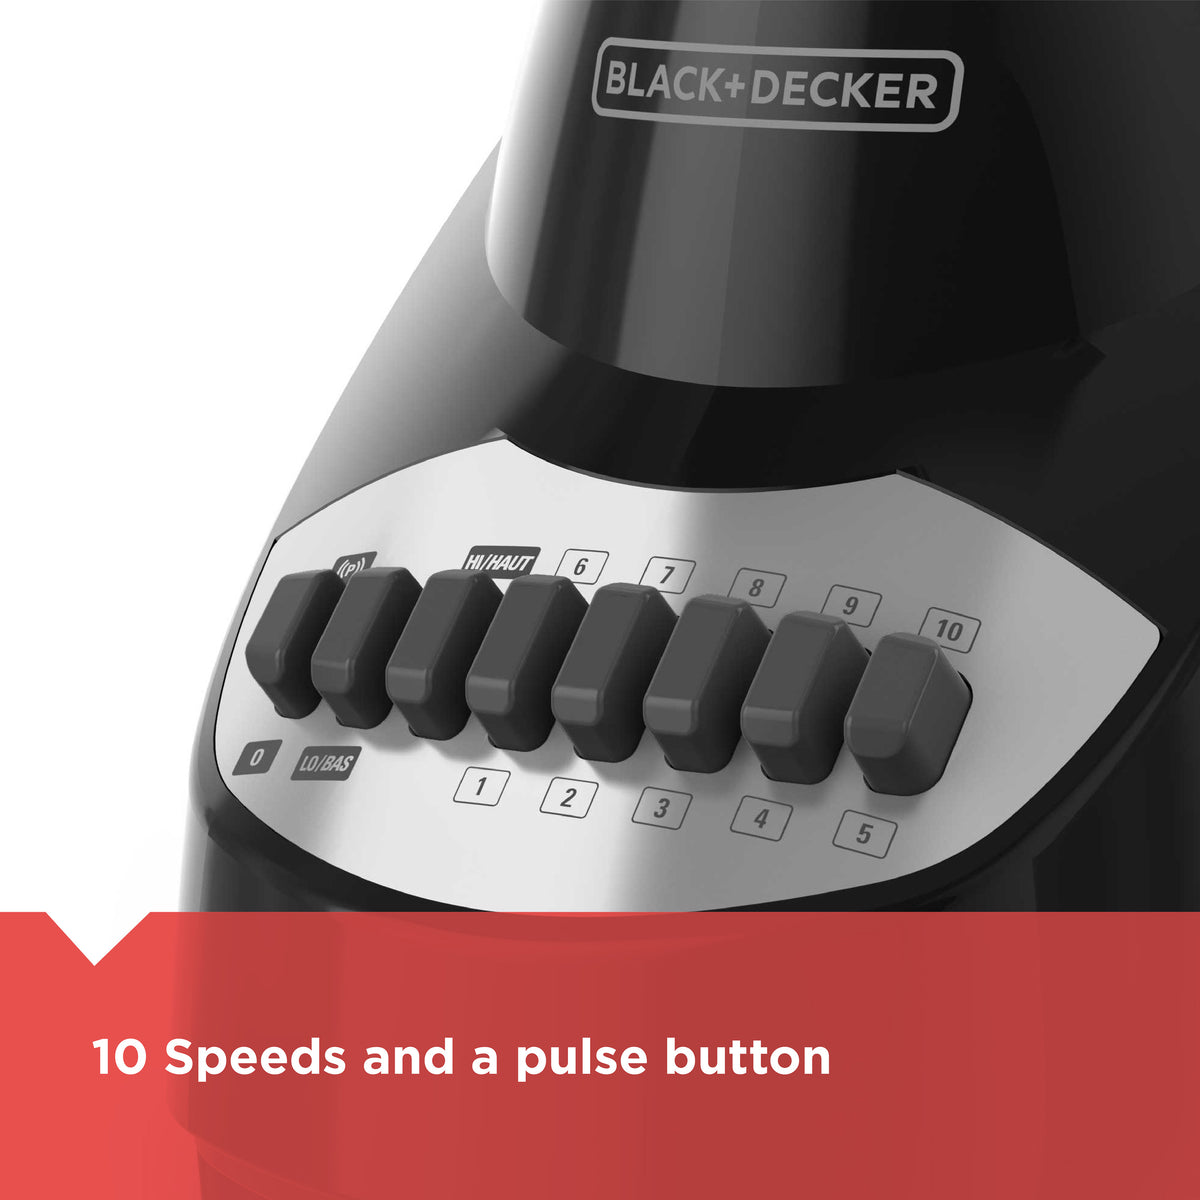  BLACK+DECKER BL1130SG FusionBlade Blender with 6-Cup